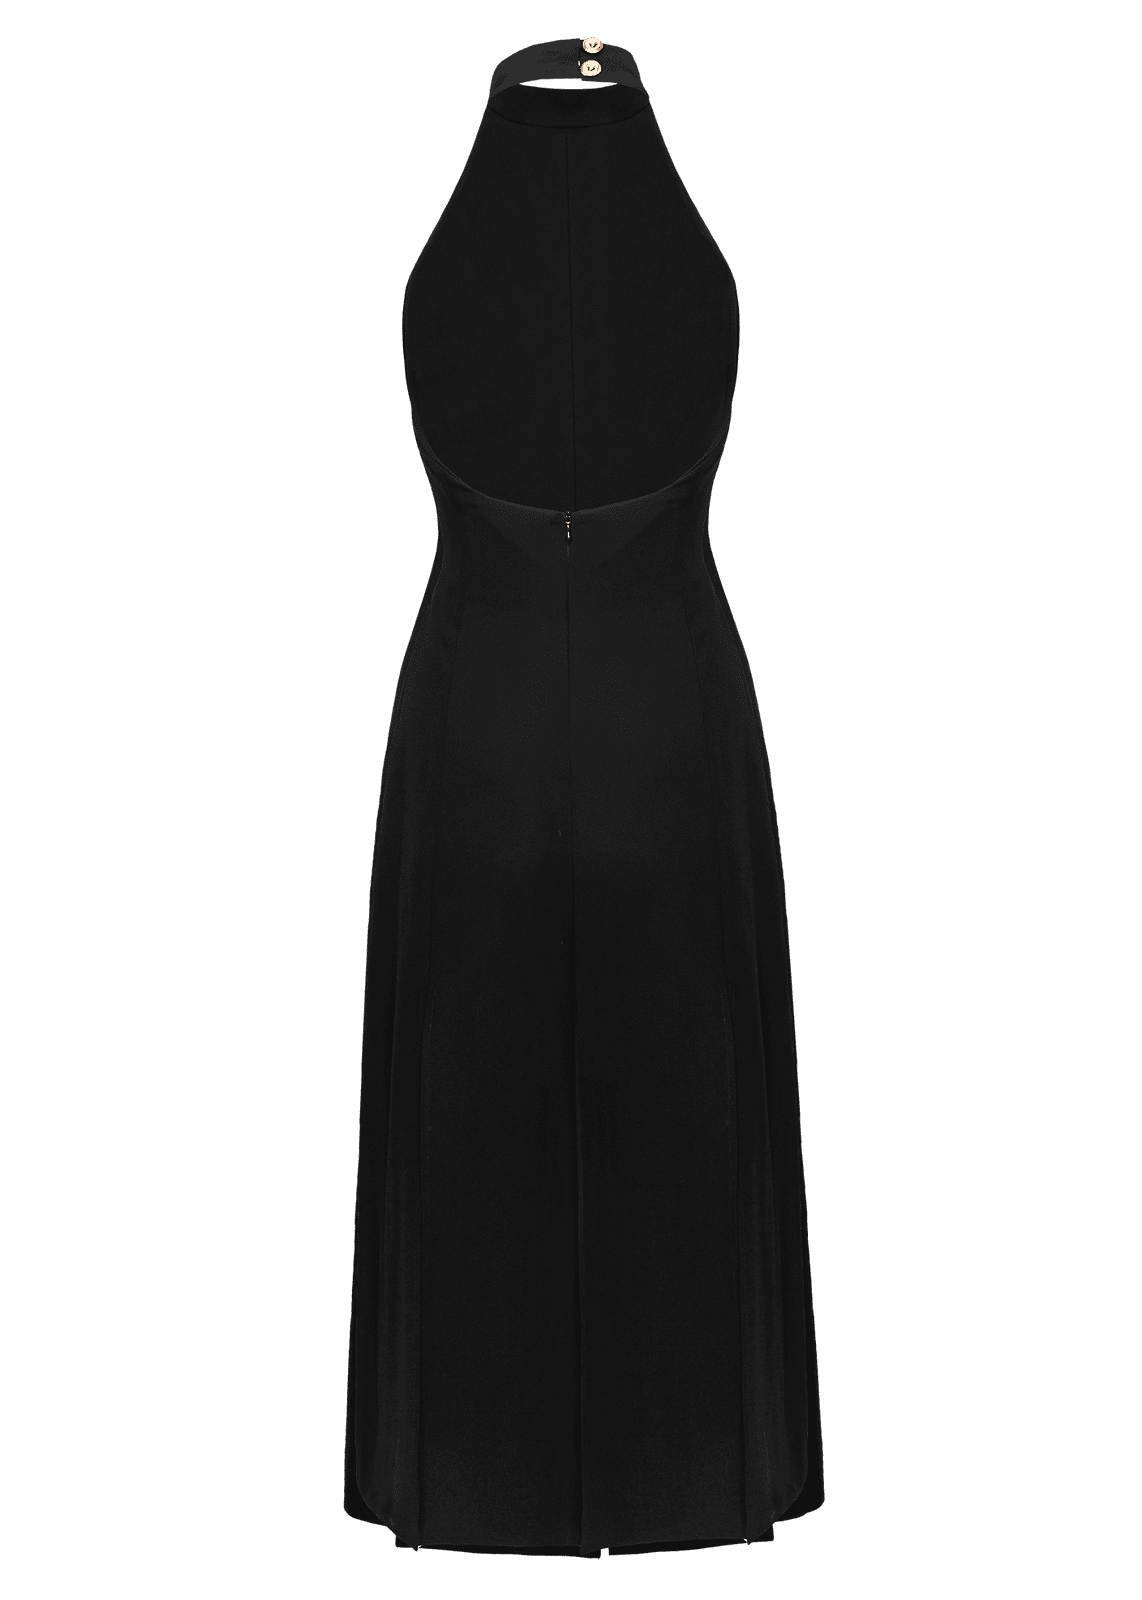 ALTERNATIVE BLACK DRESS